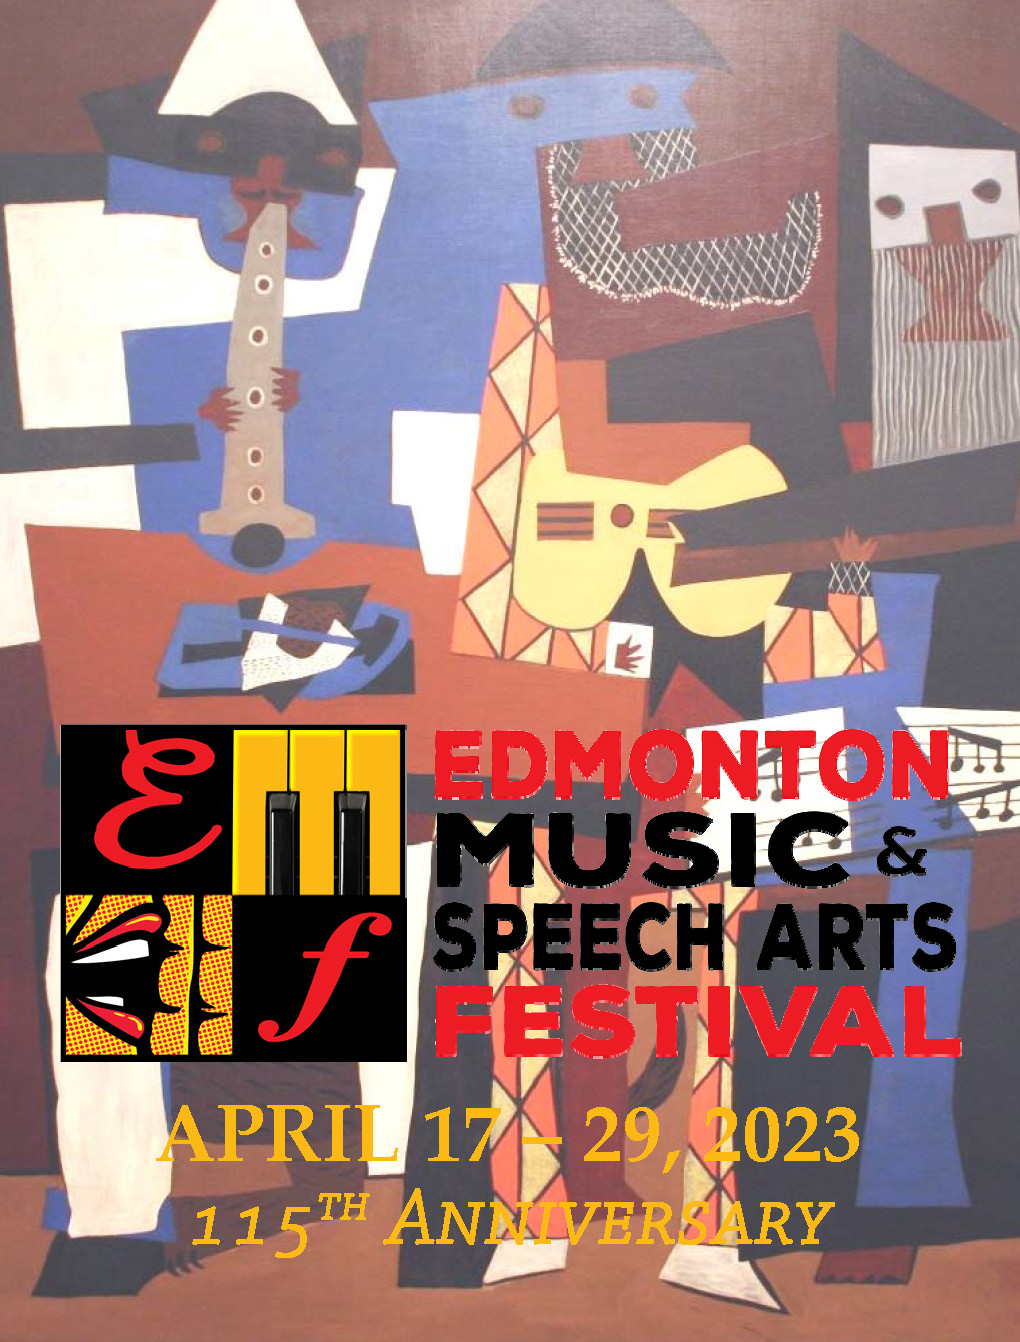 2023 Edmonton Music & Speech Arts Festival - image